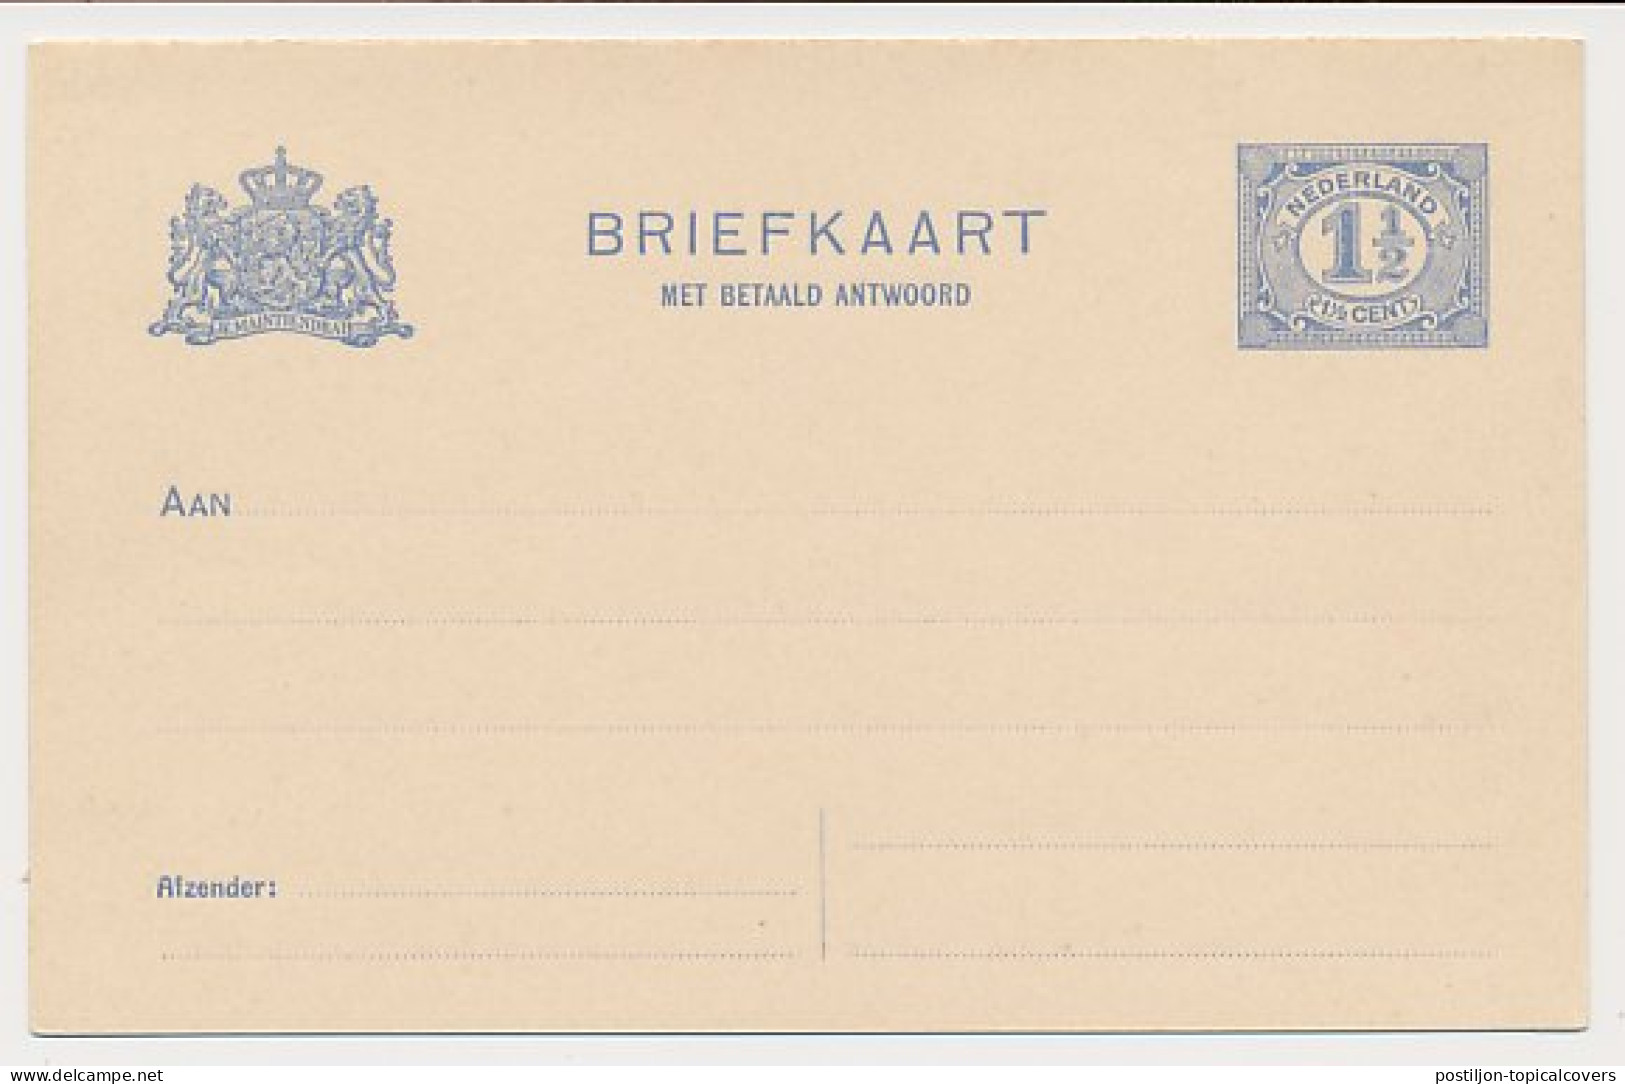 Briefkaart G. 79 II - Postal Stationery